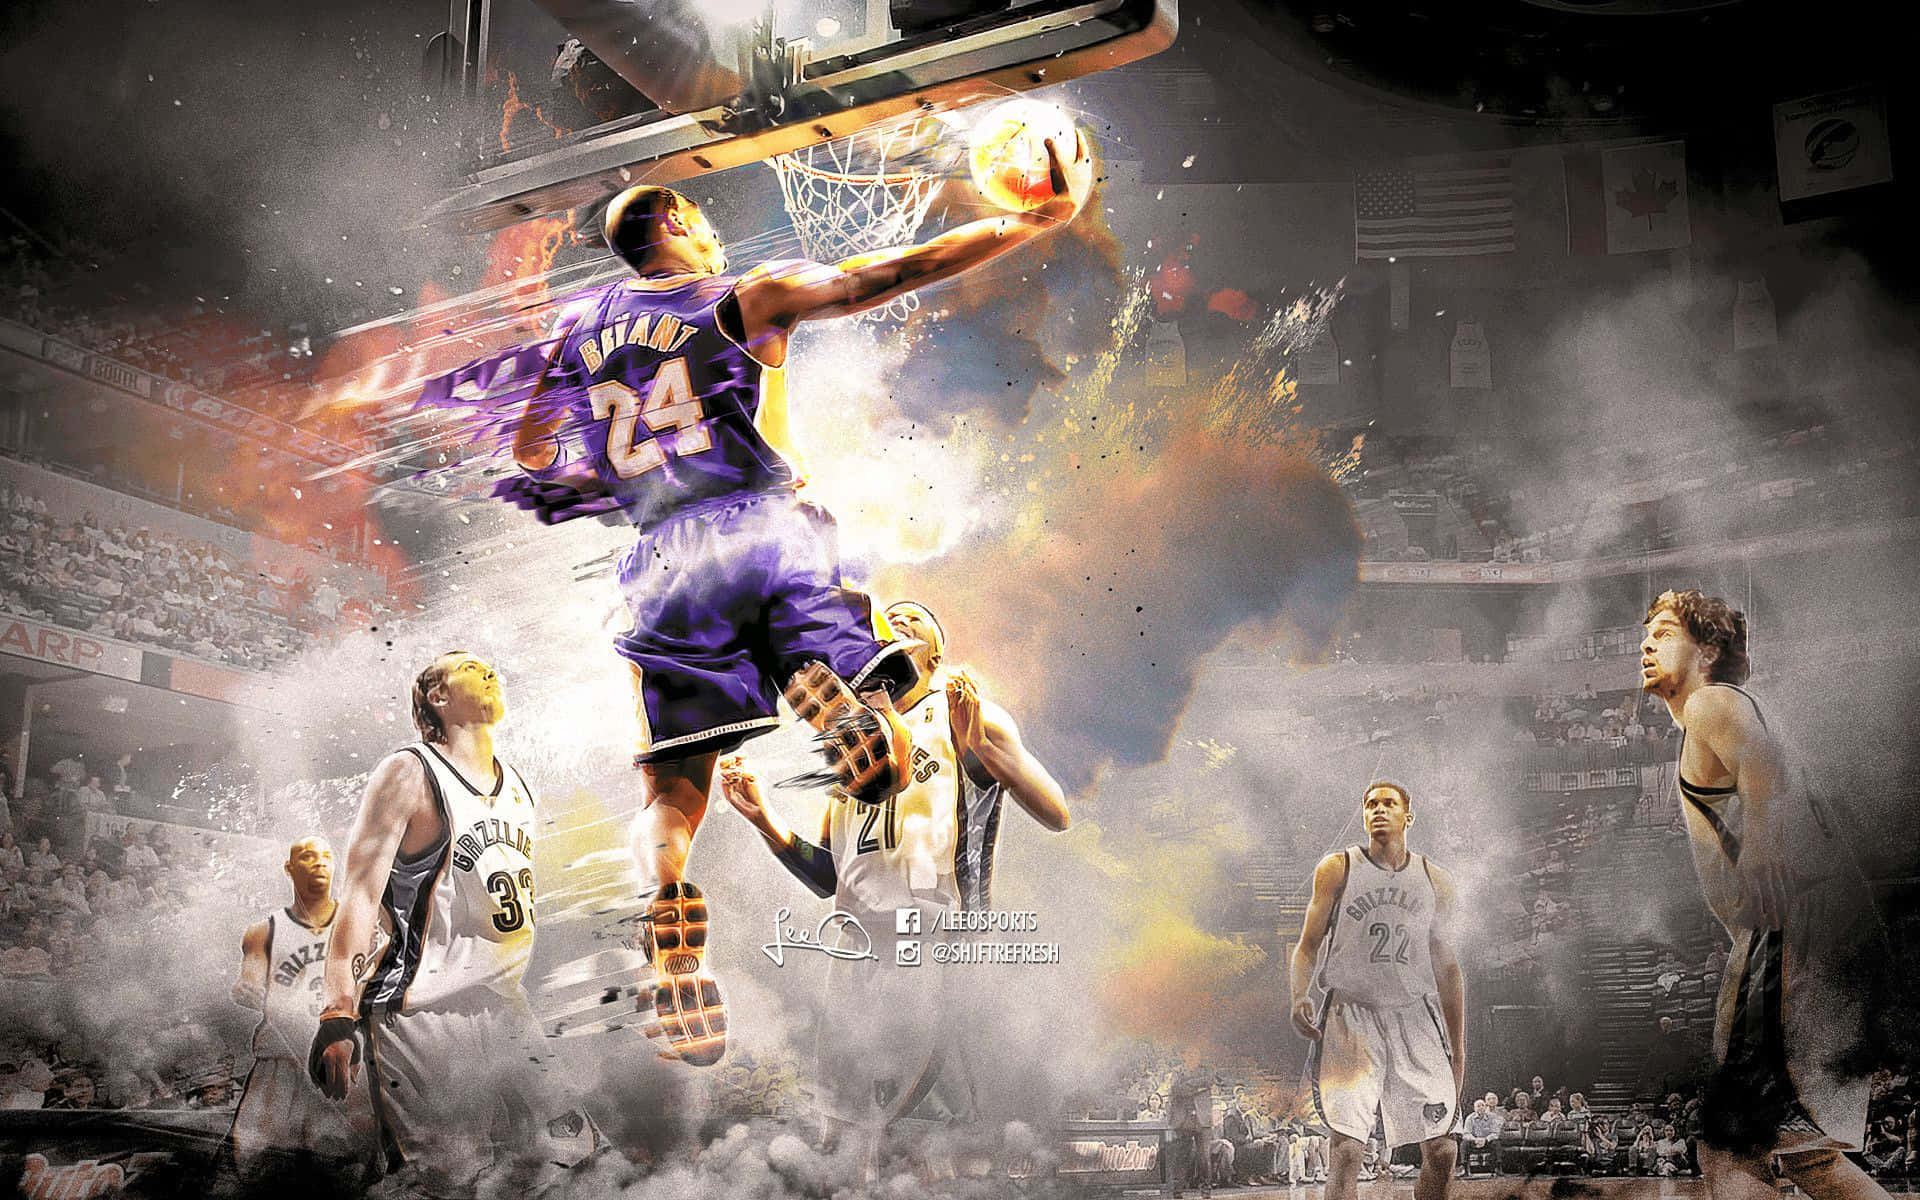 Kobe Bryant, basketball great